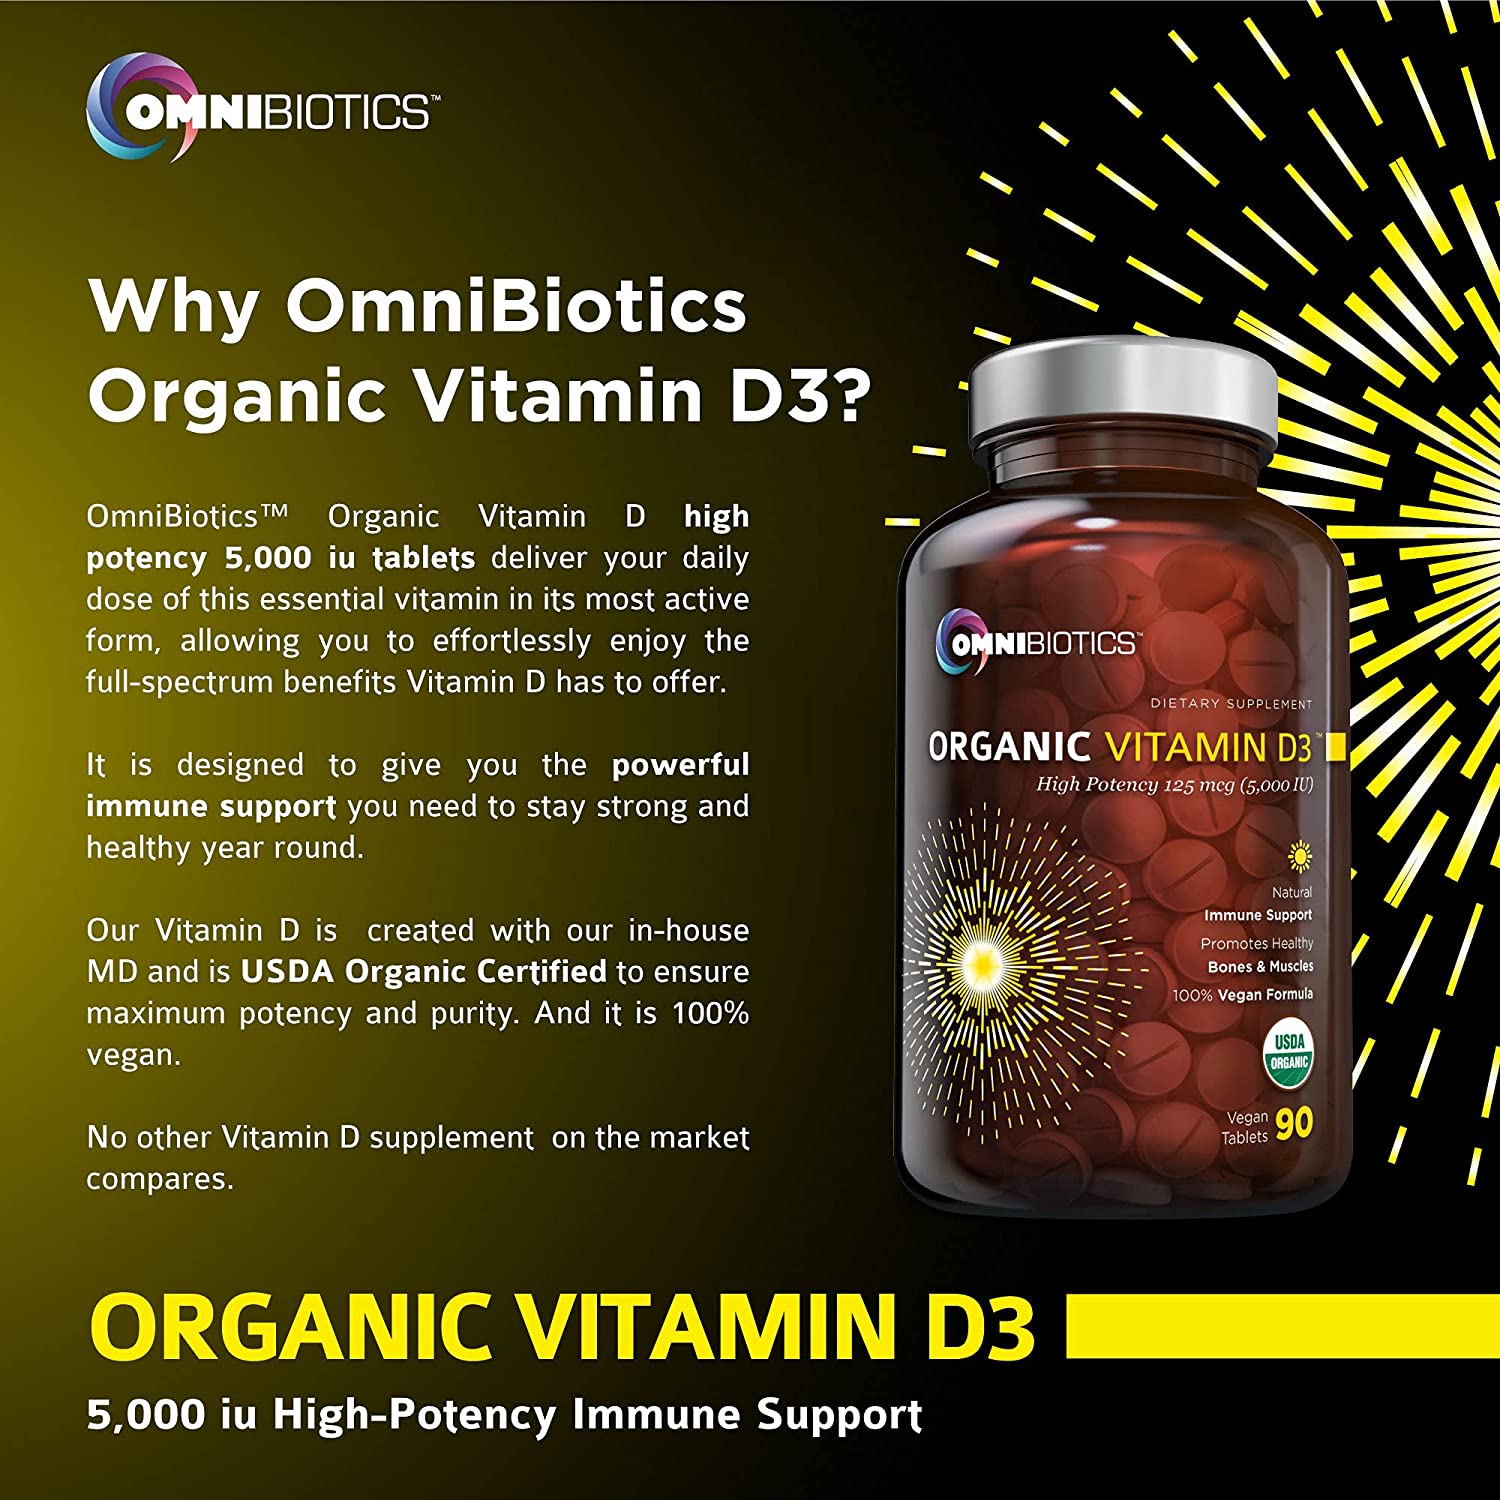 Organic Vitamin D3